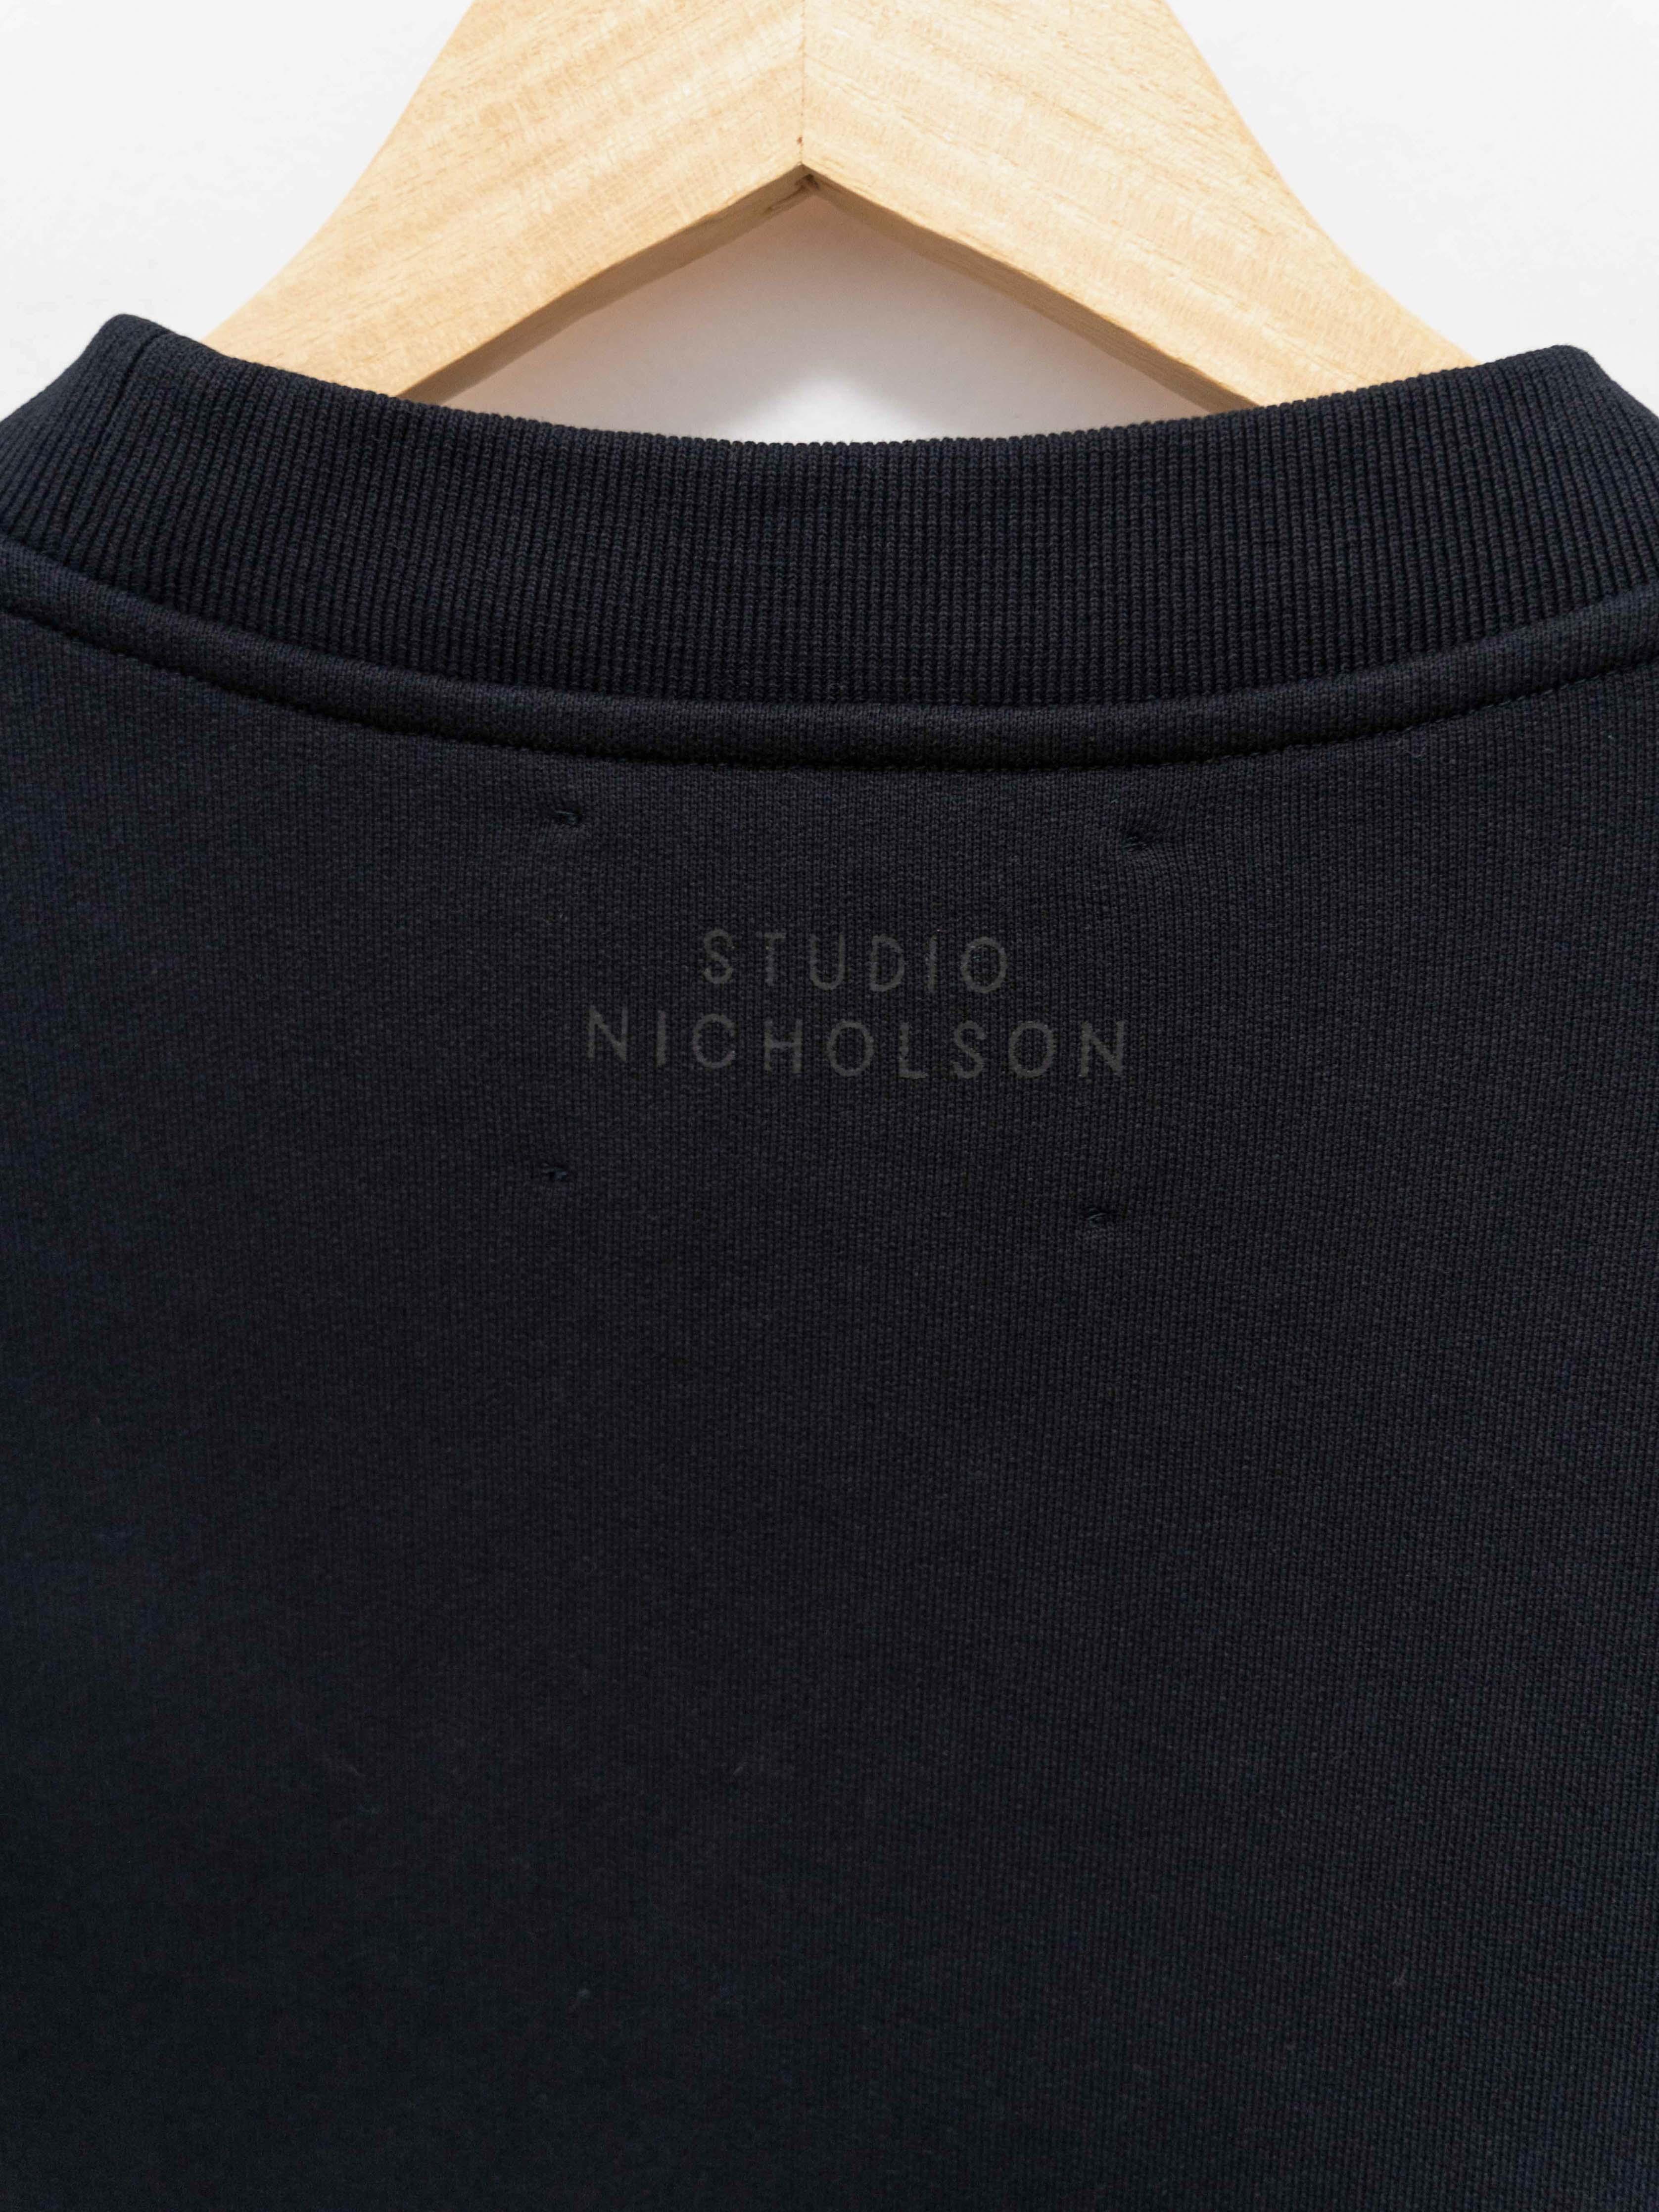 Namu Shop - Studio Nicholson Brawn Sweatshirt Top - Darkest Navy